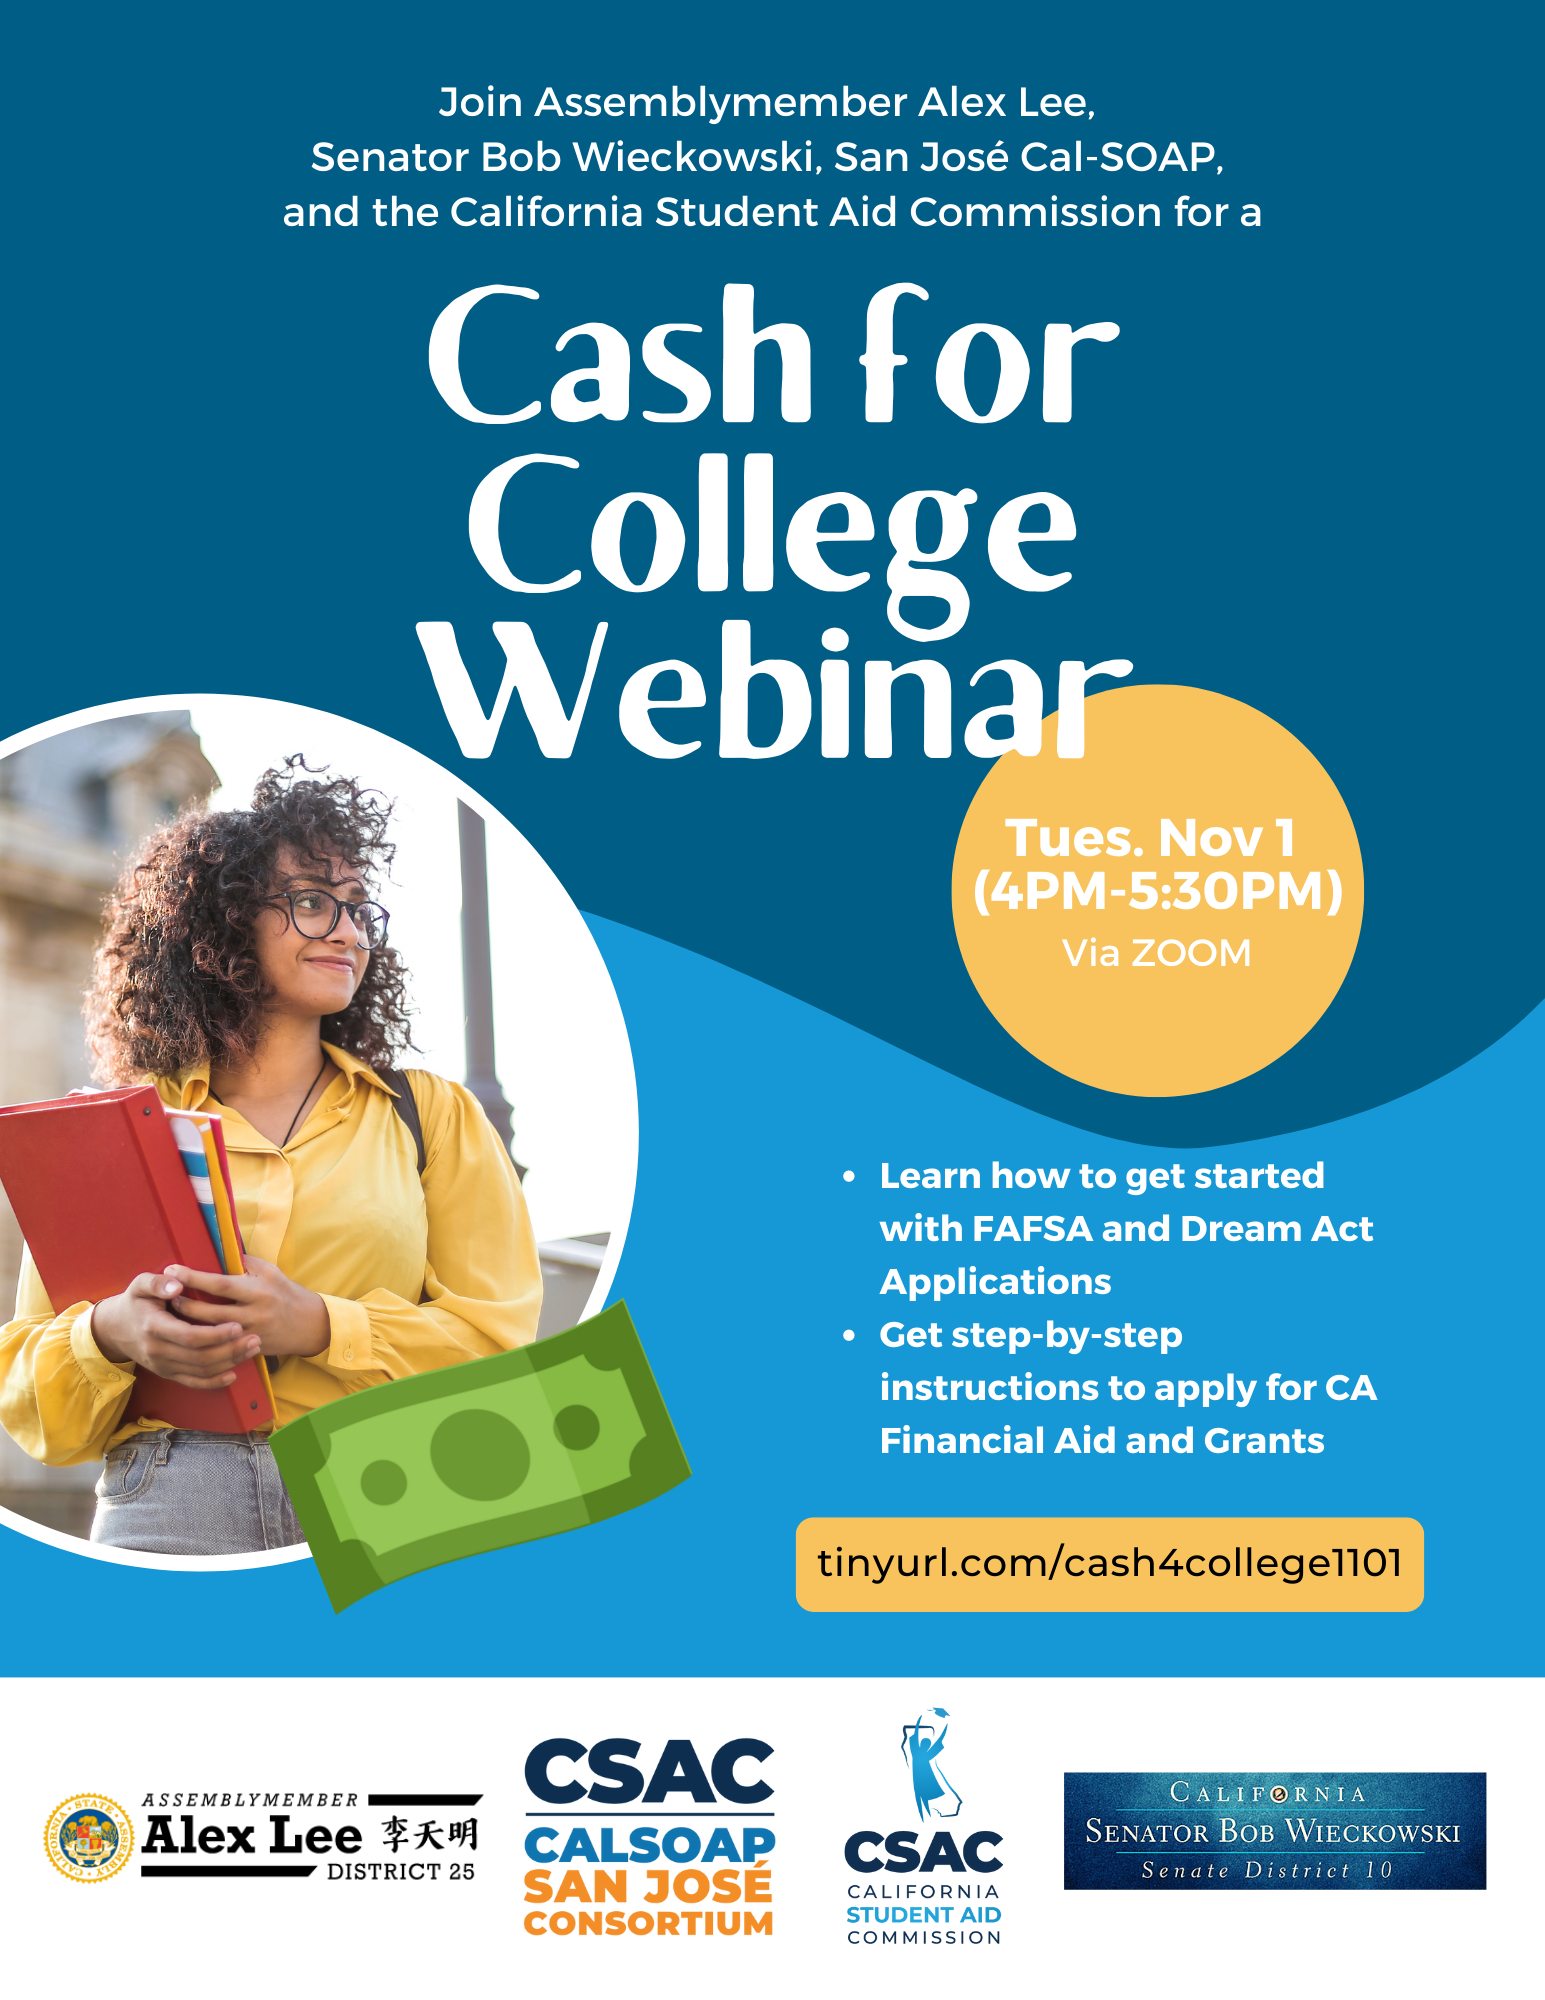 Cash for College Webinar - November 1